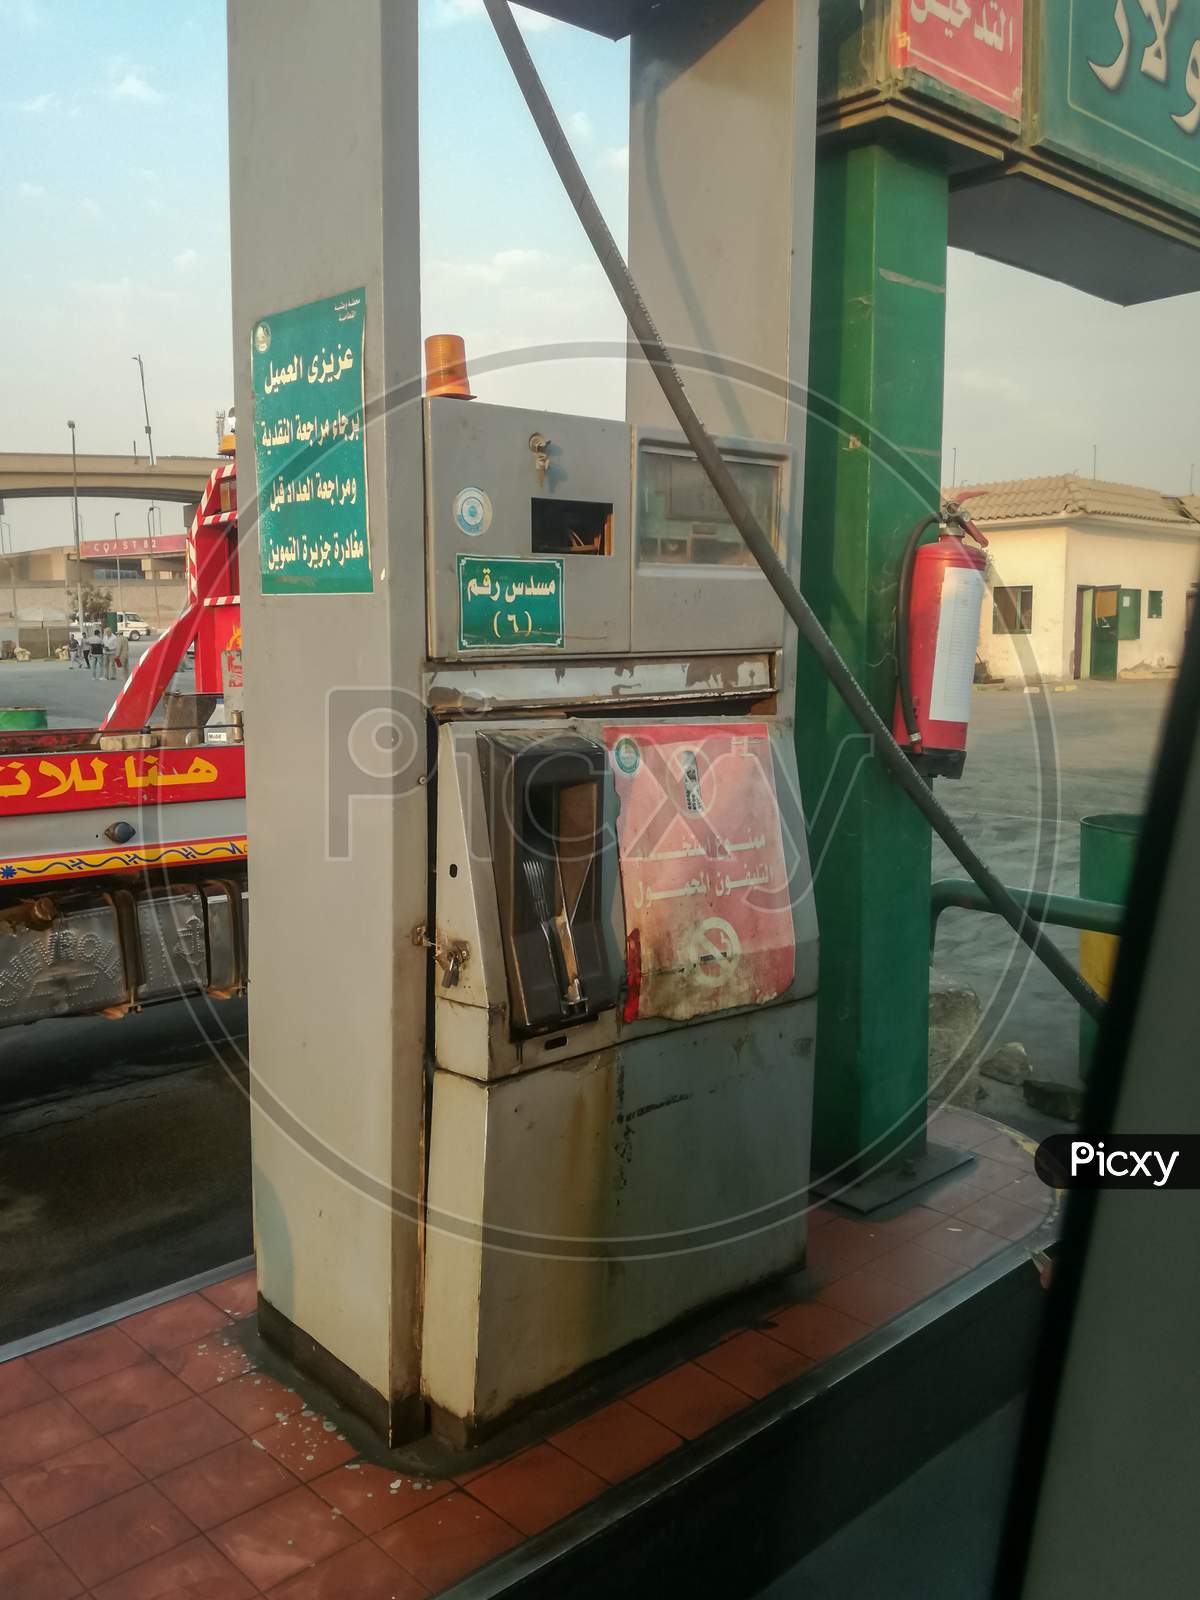 Hurghada, Egypt- November 2017: Real City Gass Station